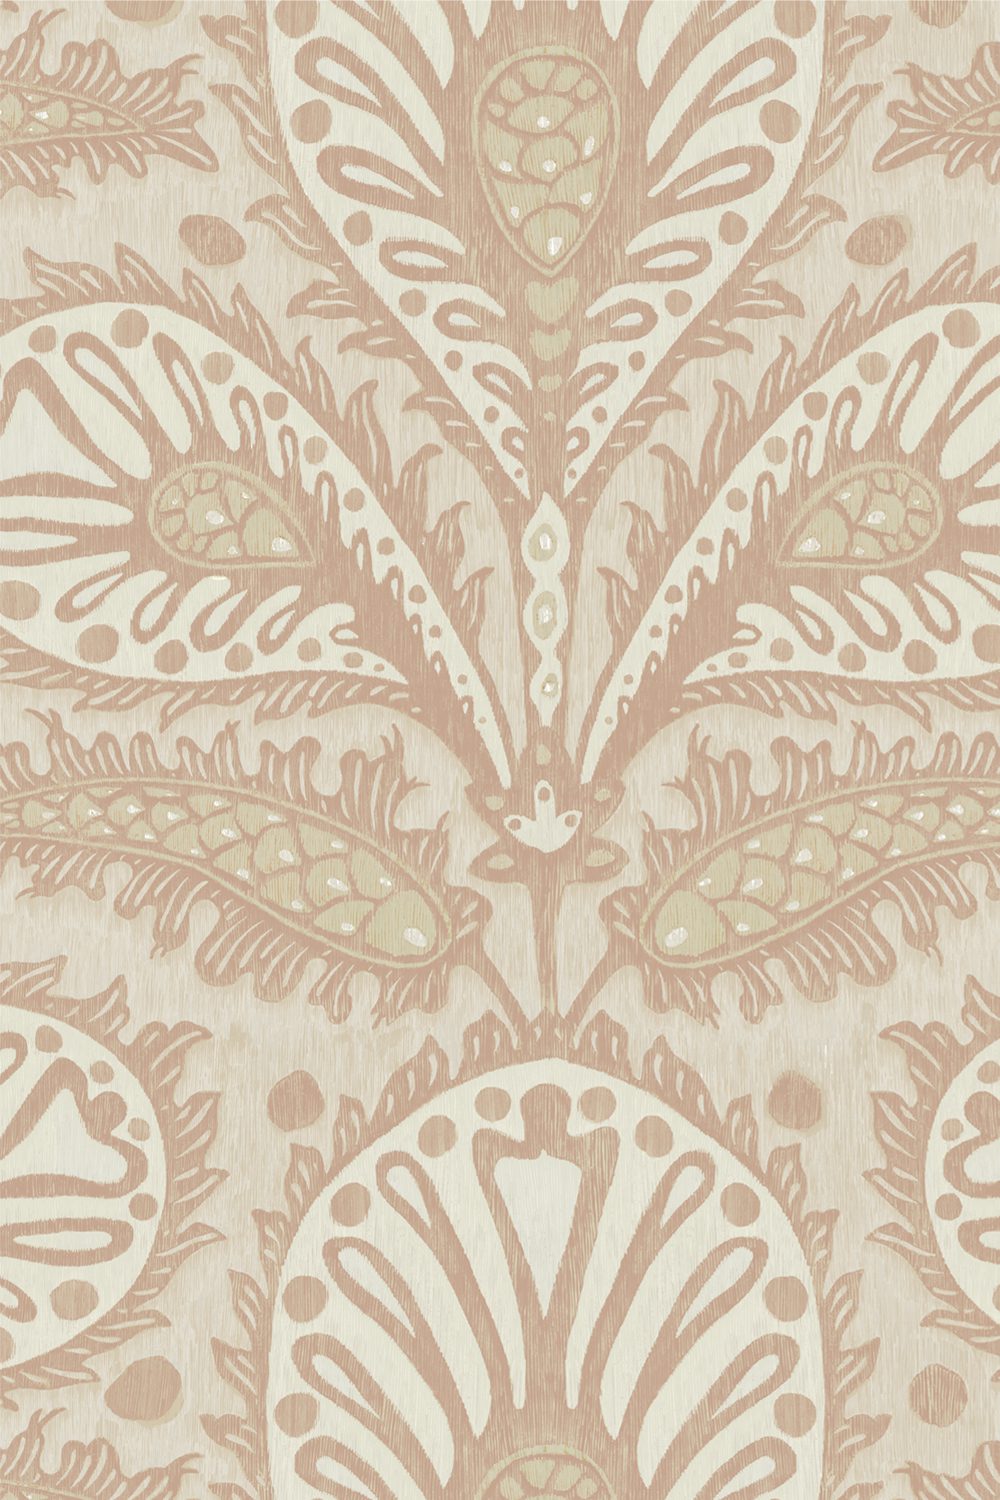 Josephine-Munsey-Ikat-clover-wallpaper-large-scale-ogee-shape-design-foliage-print-paisley-pattern-four-colour-print-plaster-pink